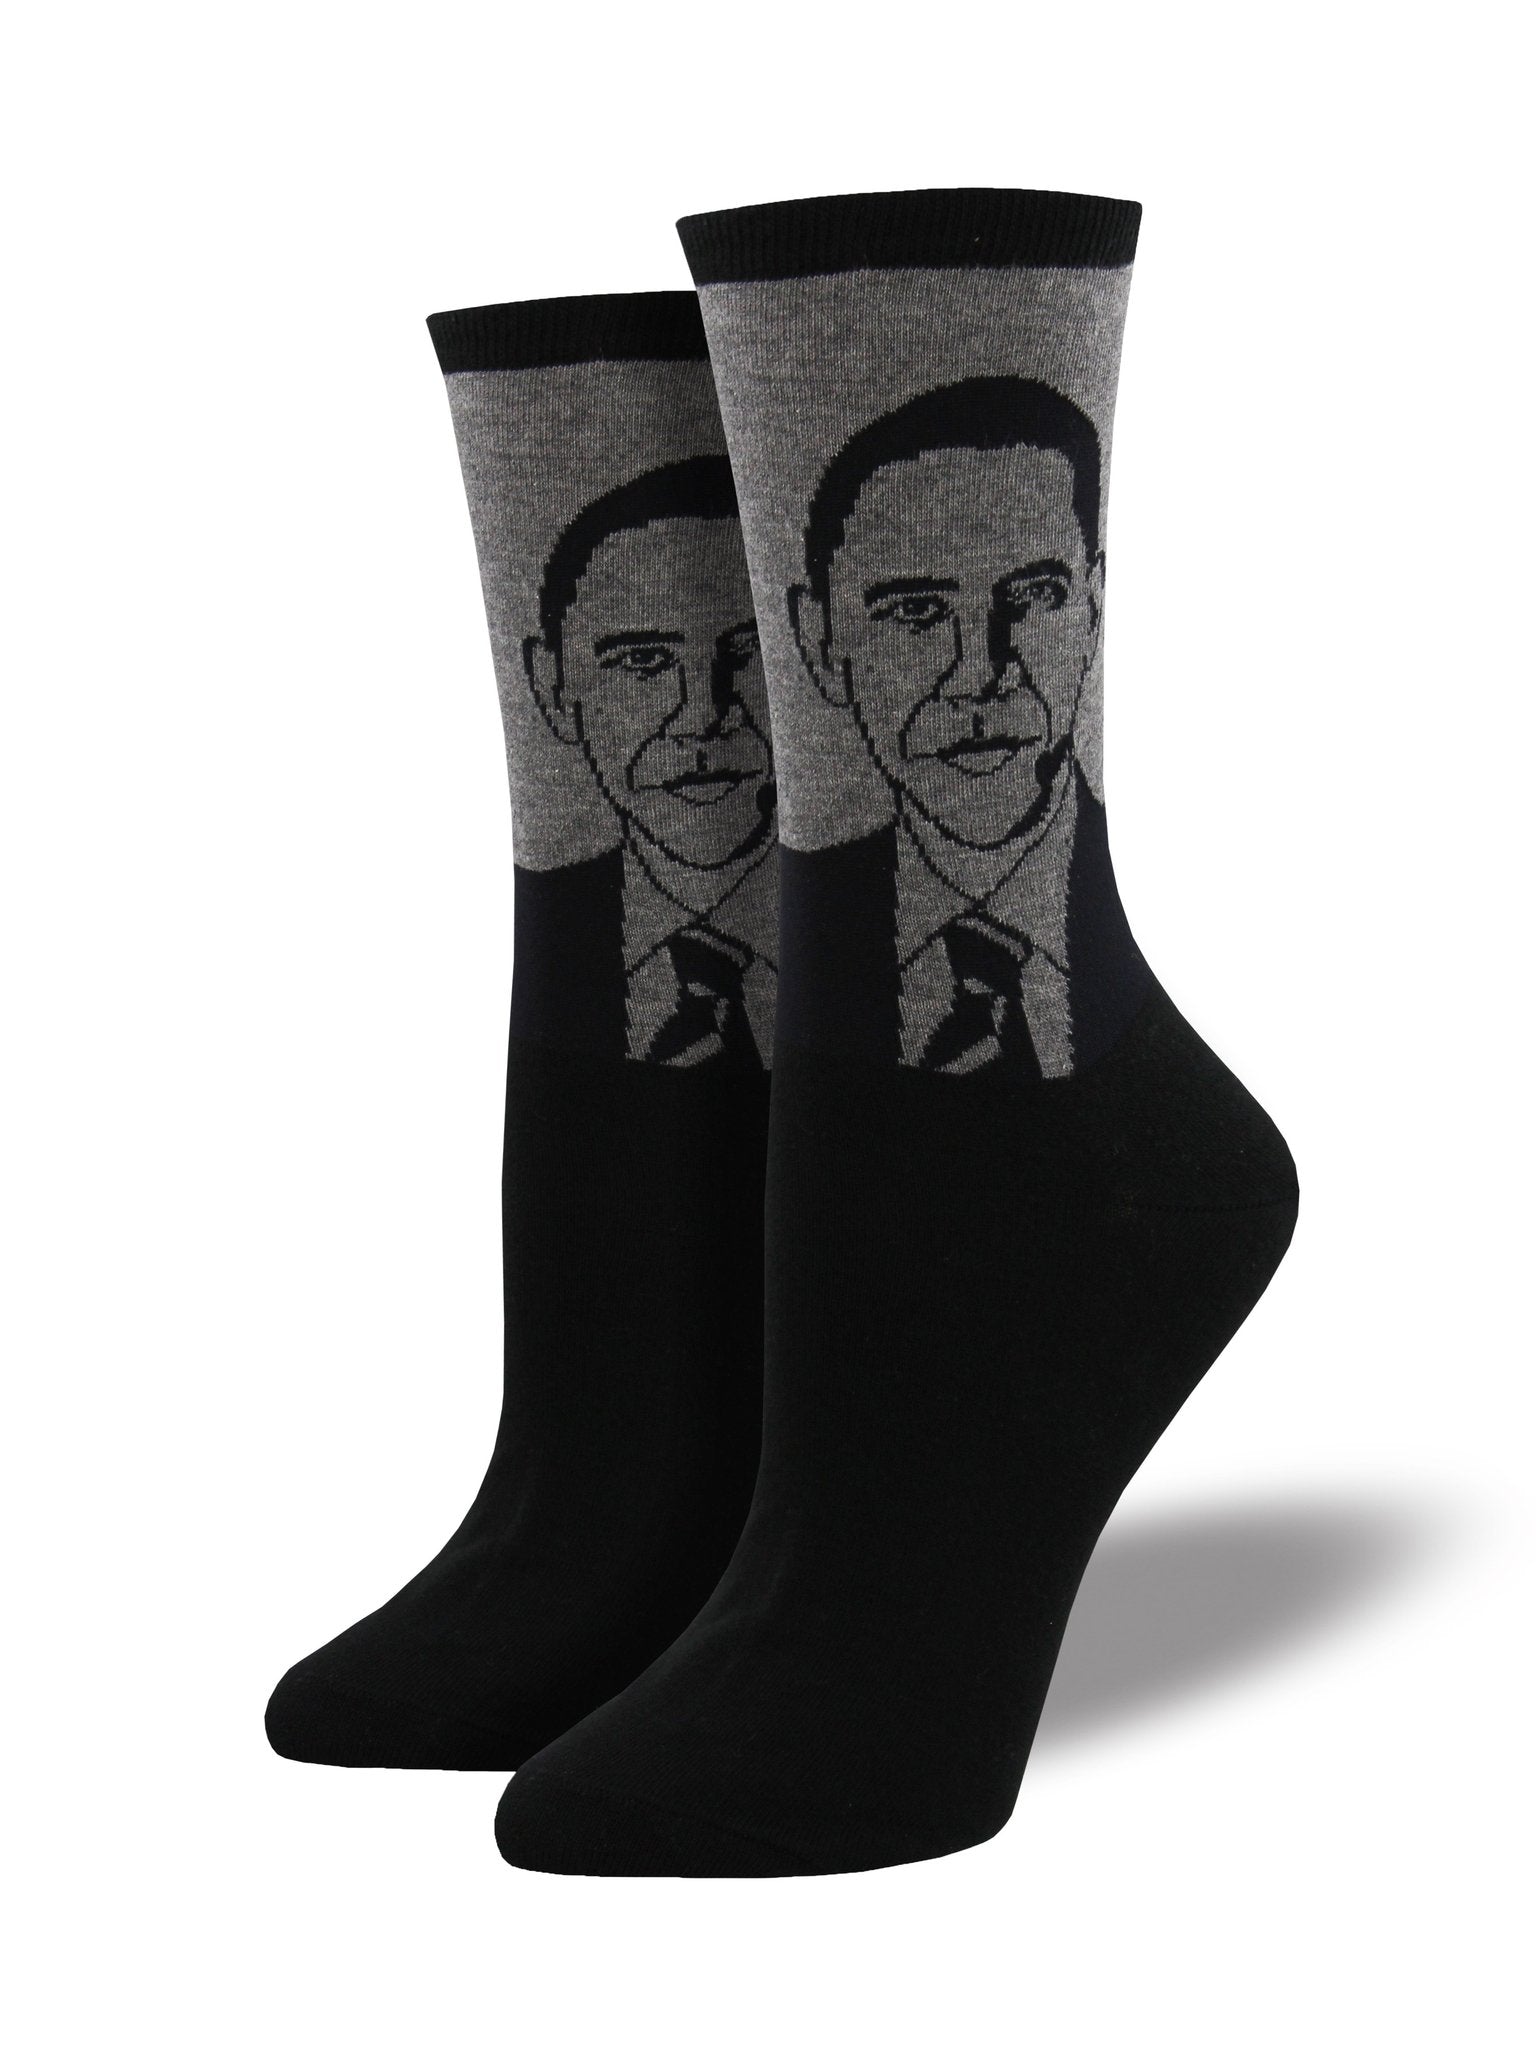 Obama Women's Socks